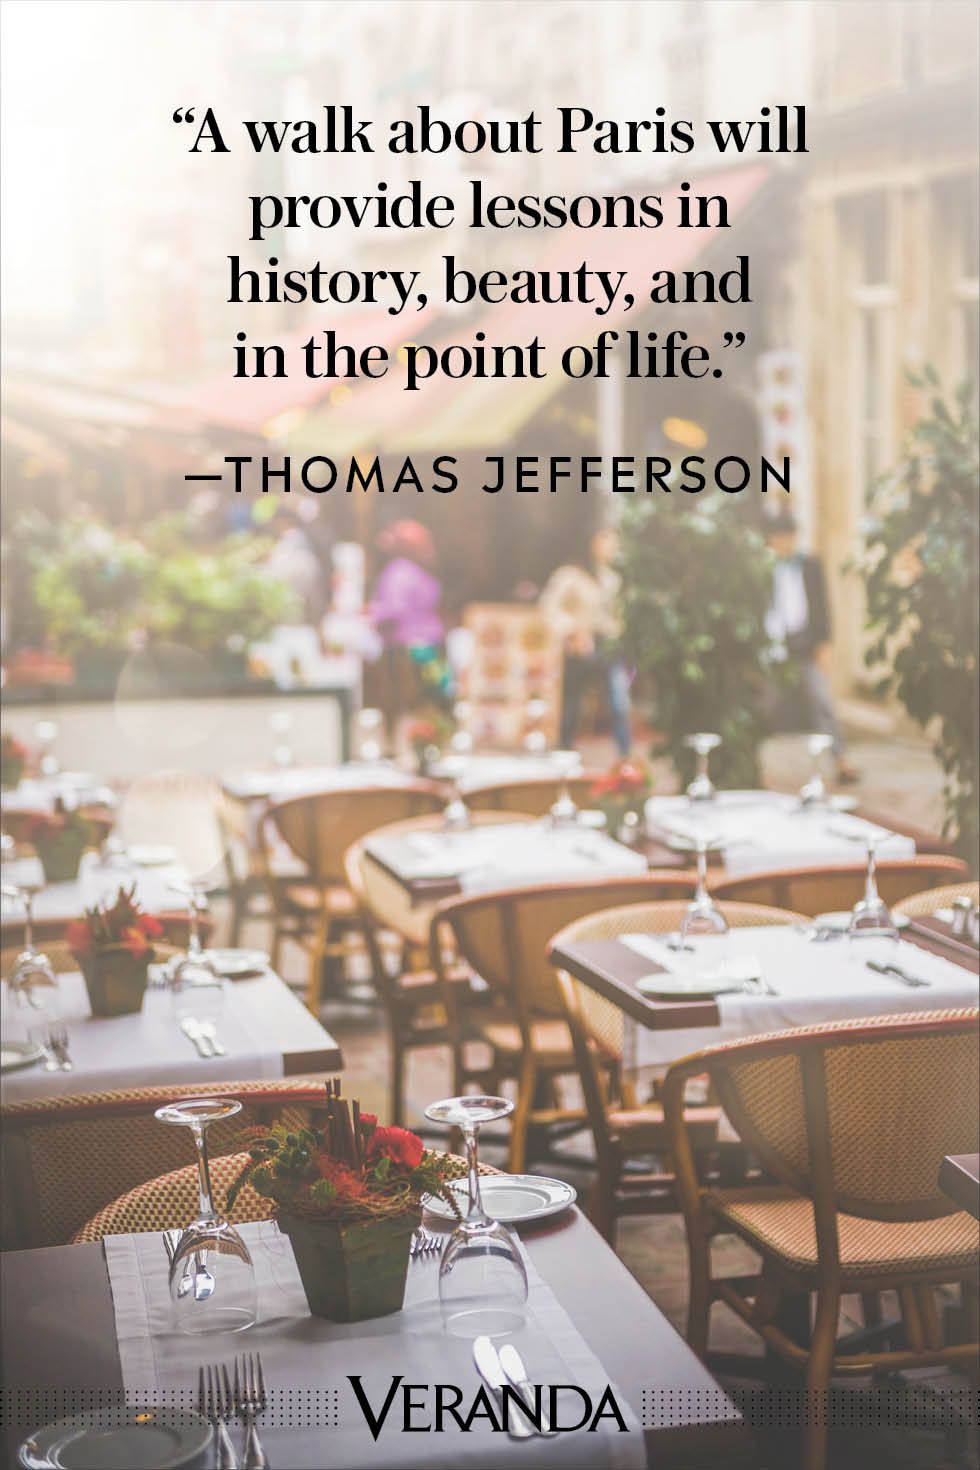 Veranda quotes about Paris Thomas Jefferson